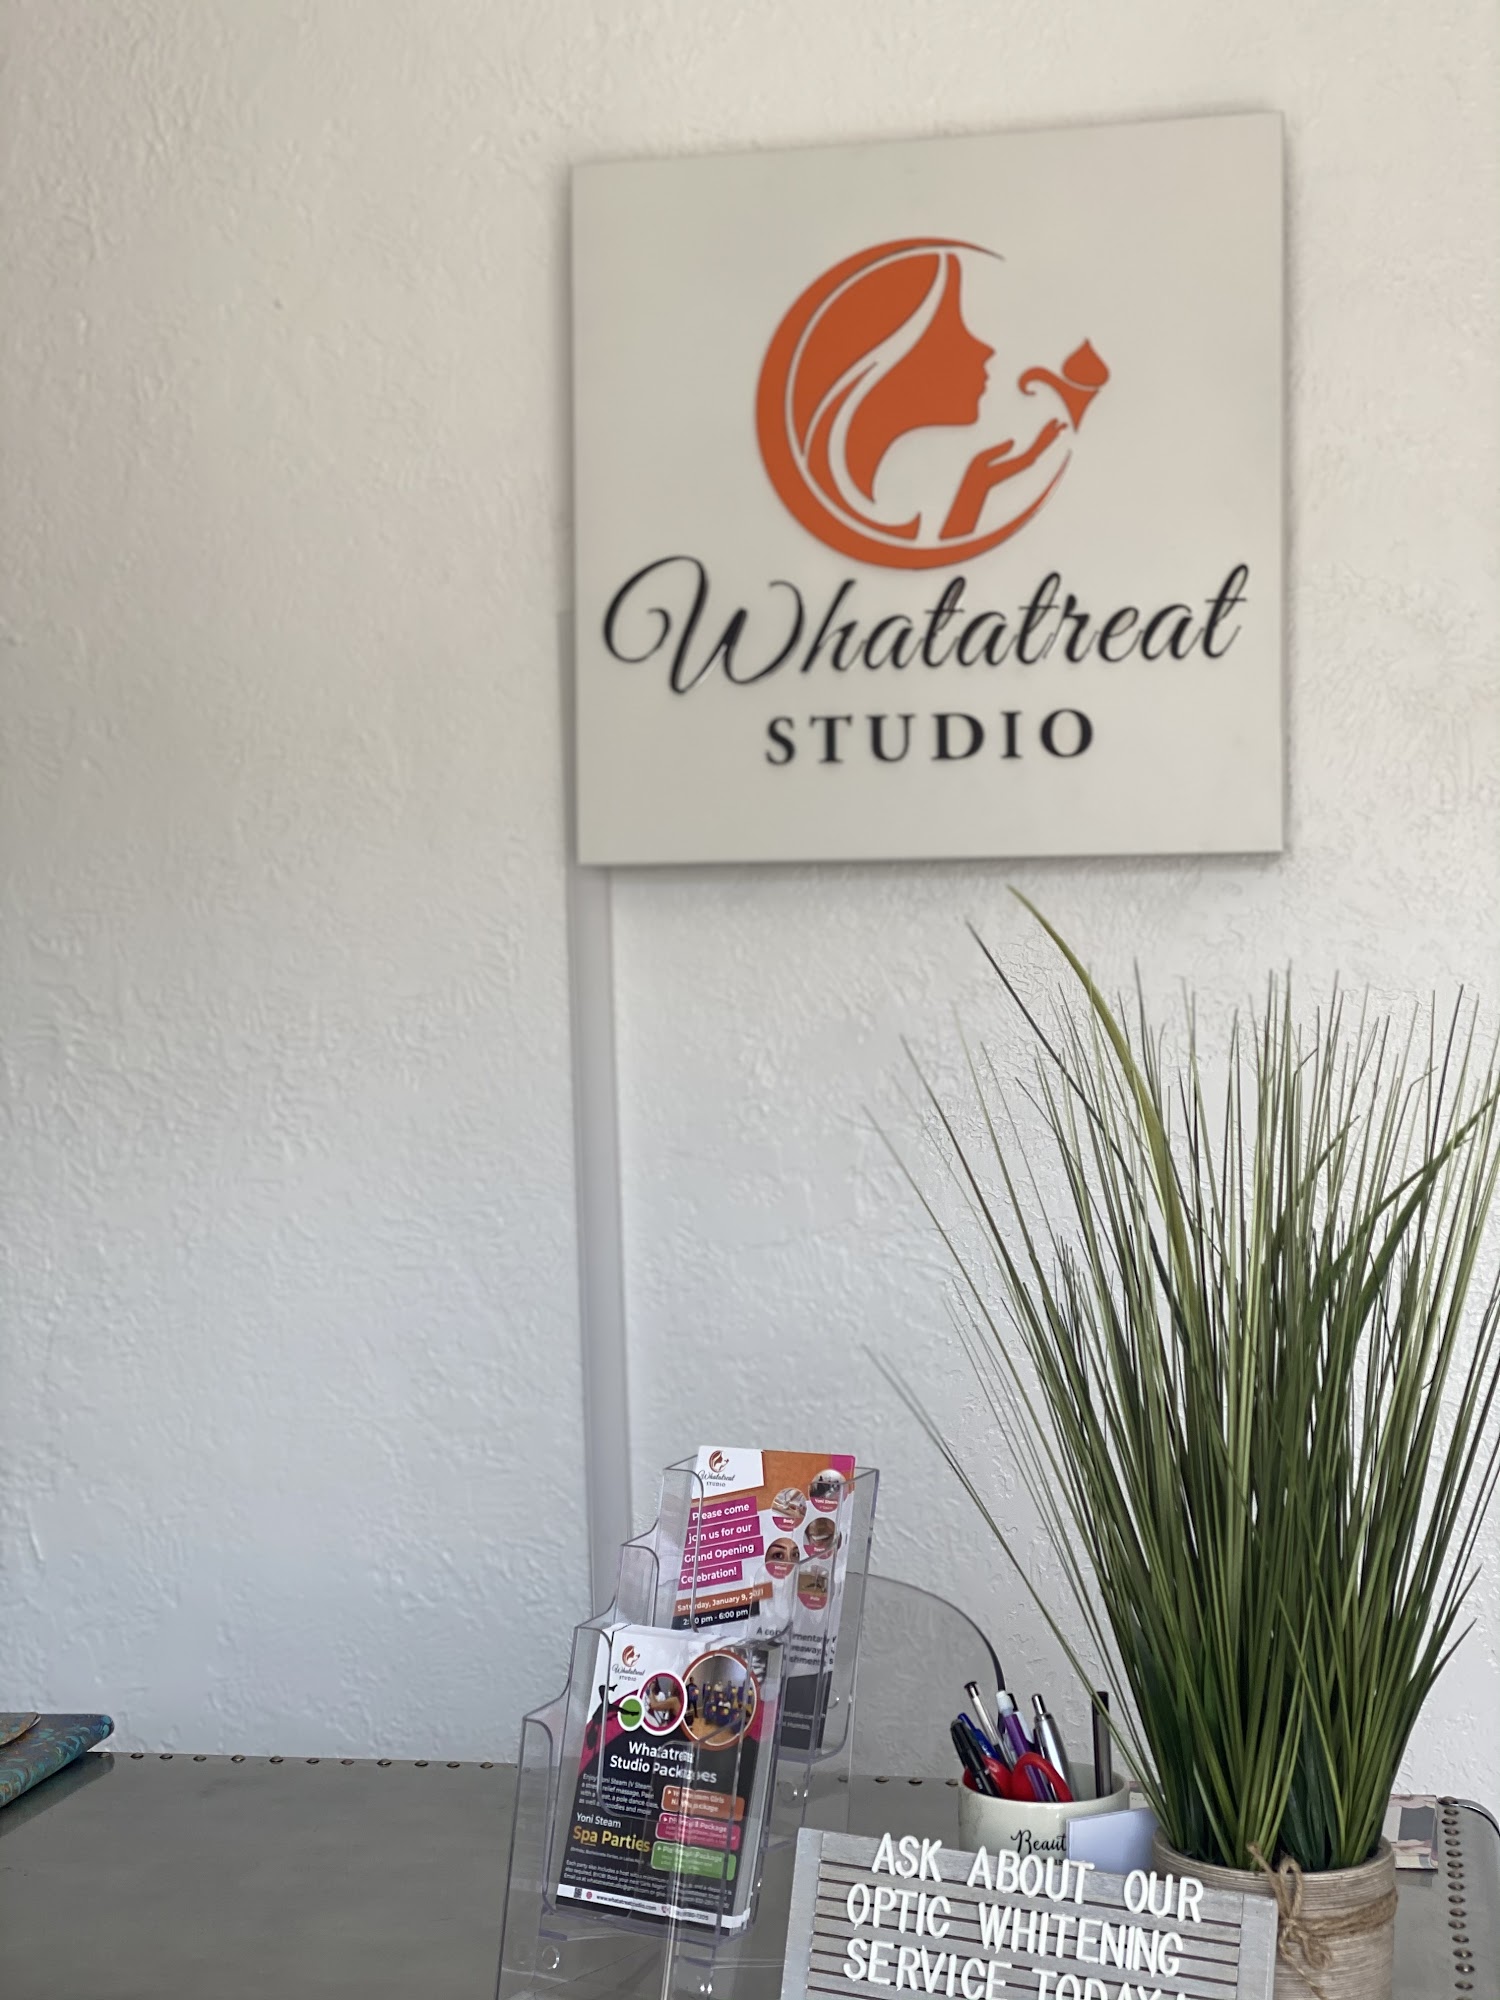 Whatatreat Studio